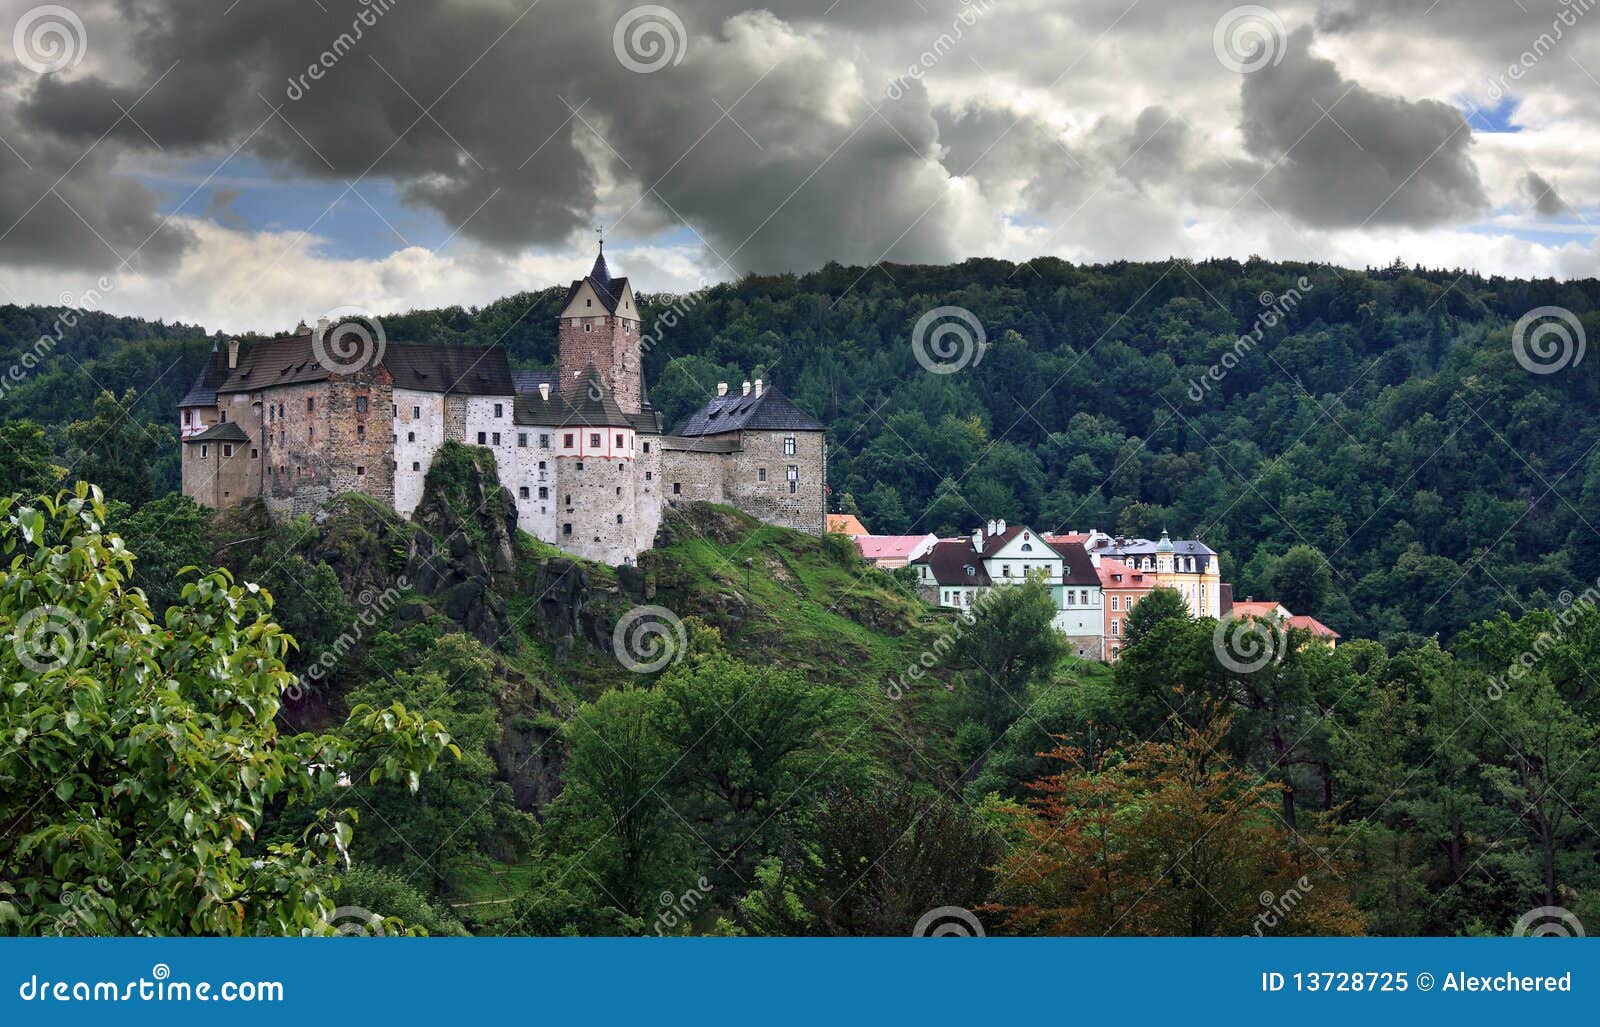 old castle and town in bohemia, loket - czech republic